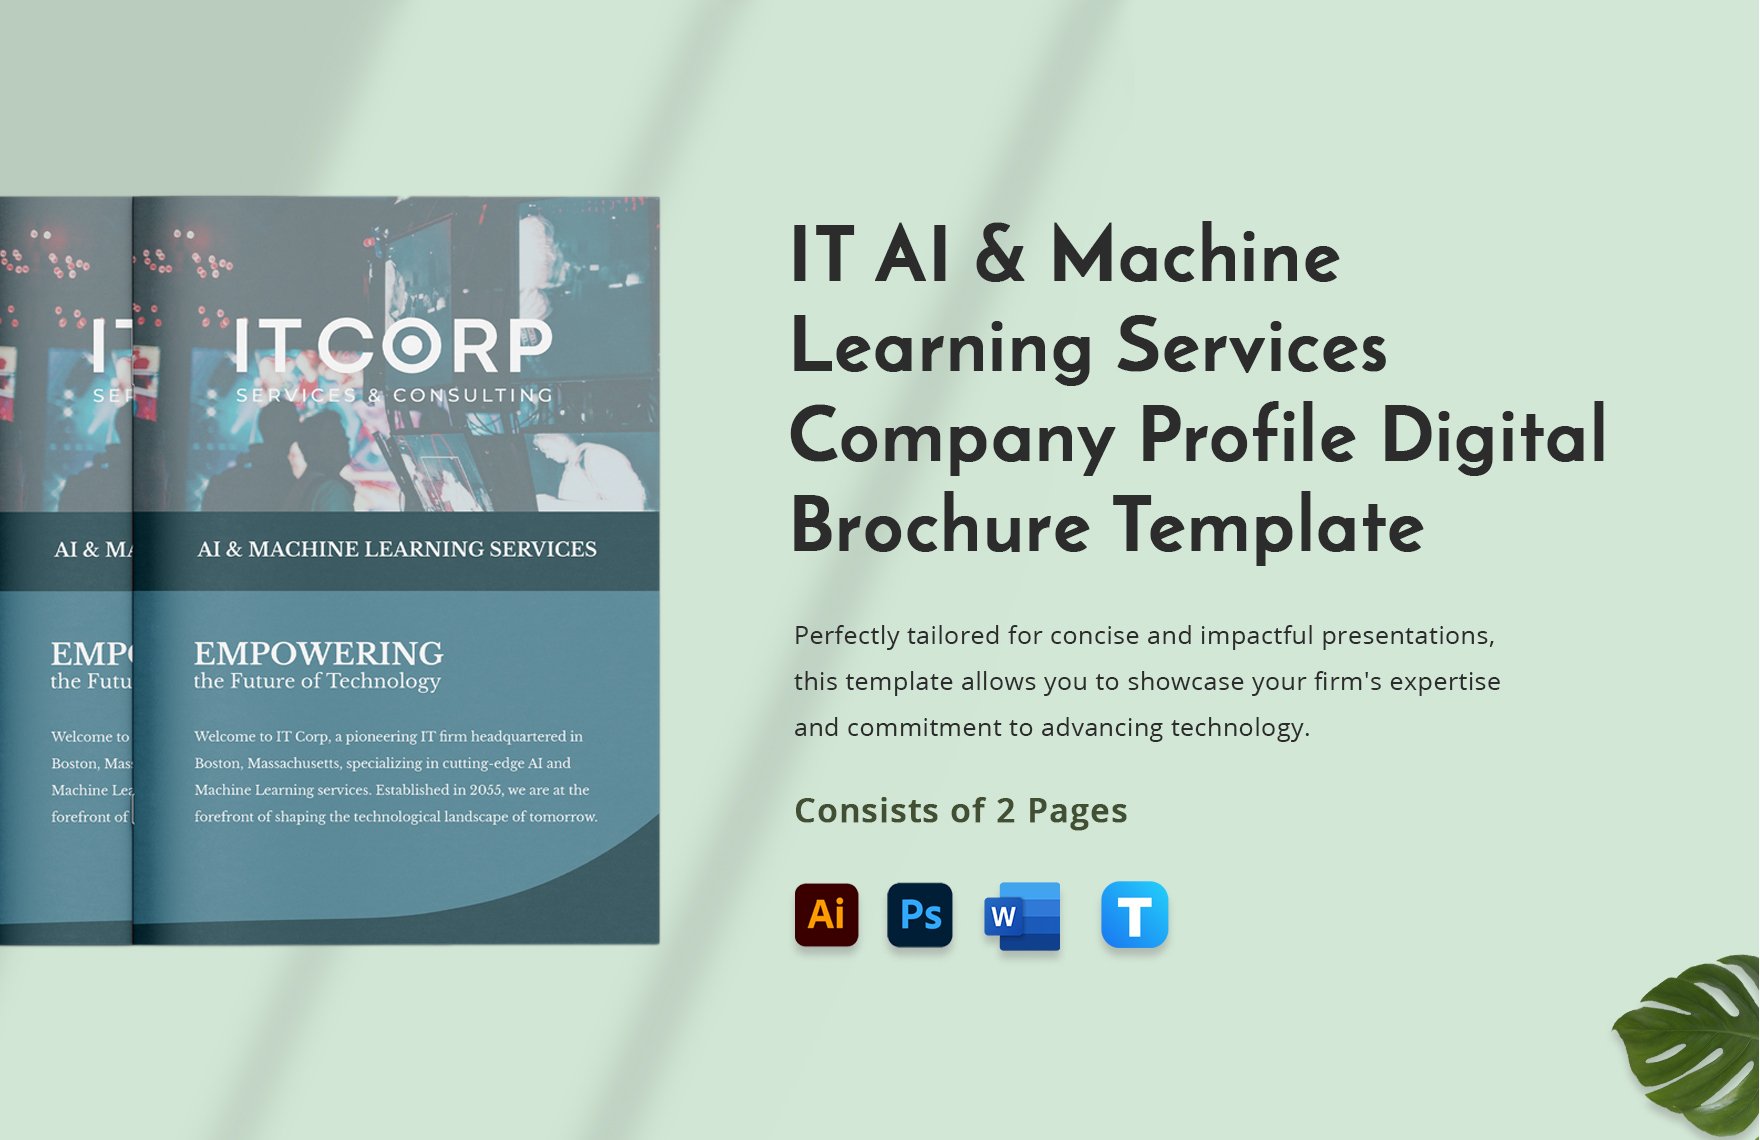 IT AI & Machine Learning Services Company Profile Digital Brochure Template